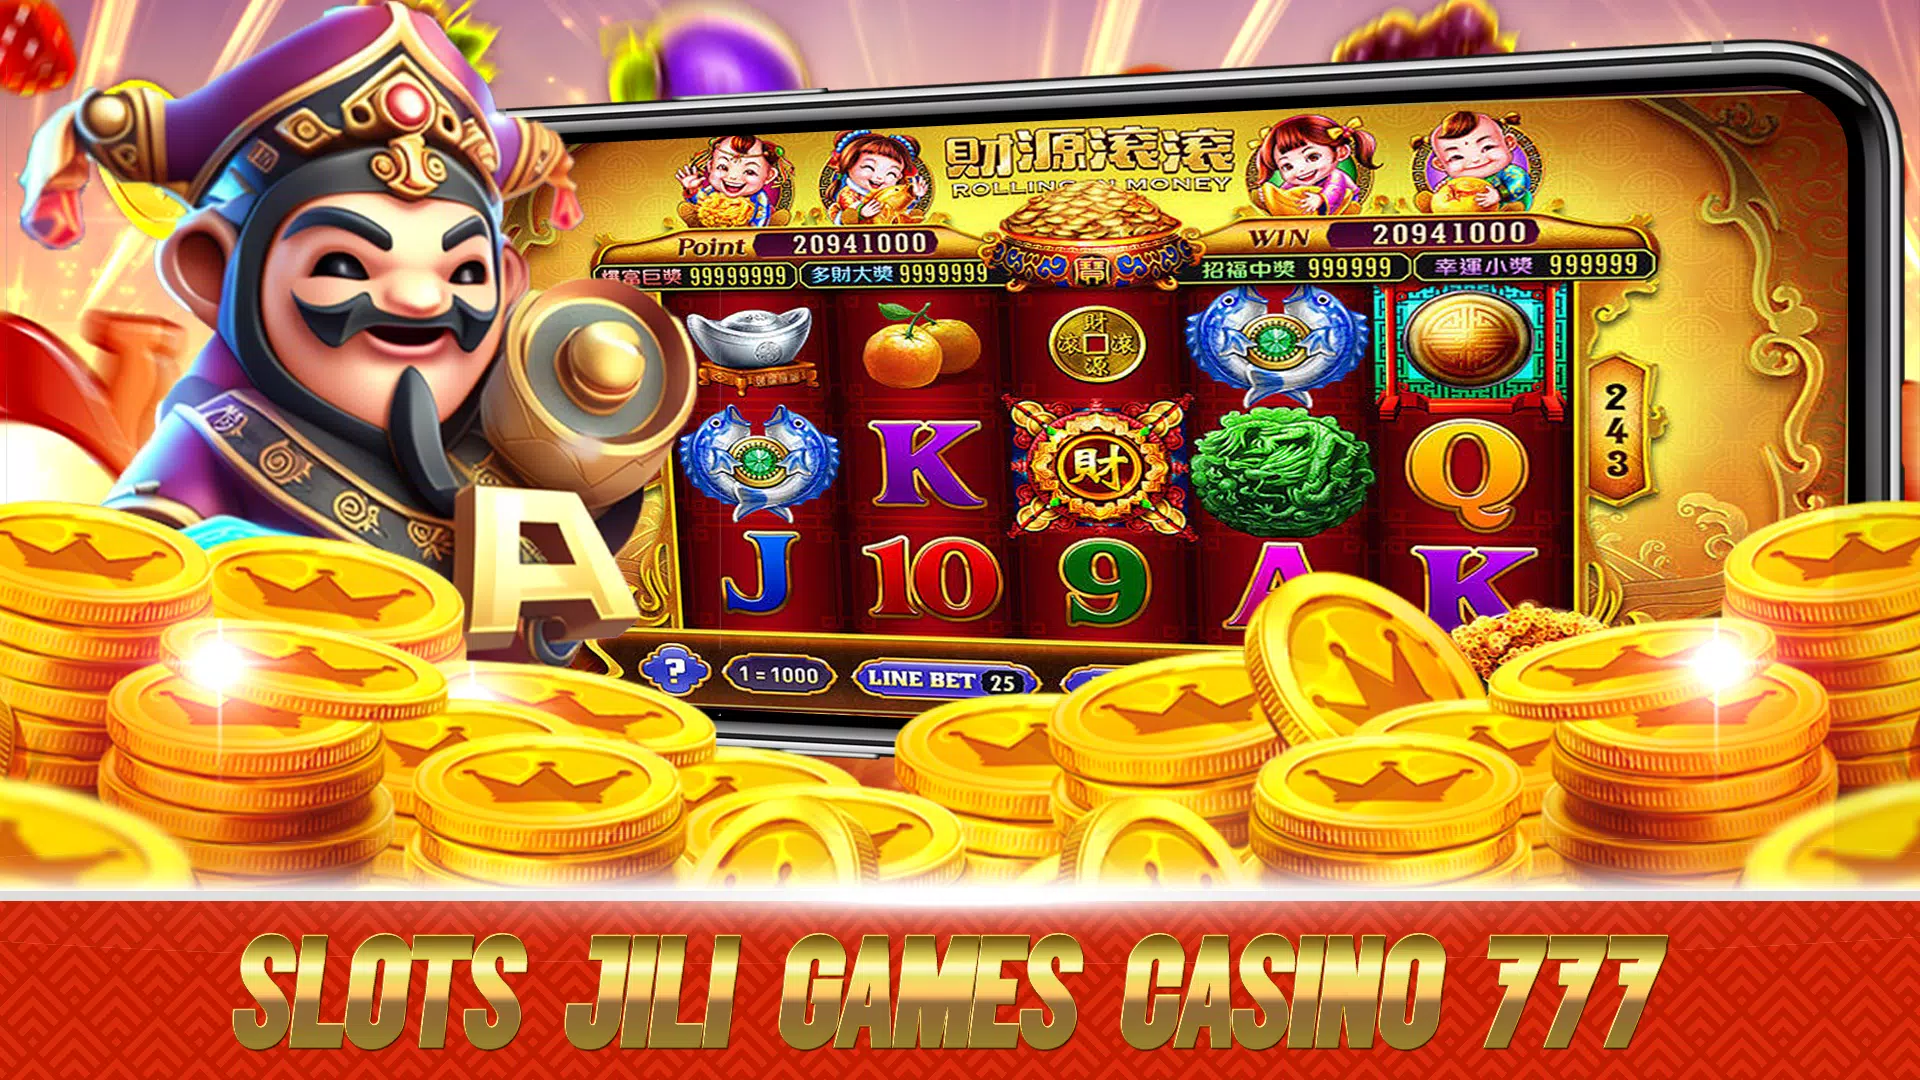 JILI Slots Casino Games (Hack_Mod) [DESBLOQUEAR VERSÃO COMPLETA] v2.0